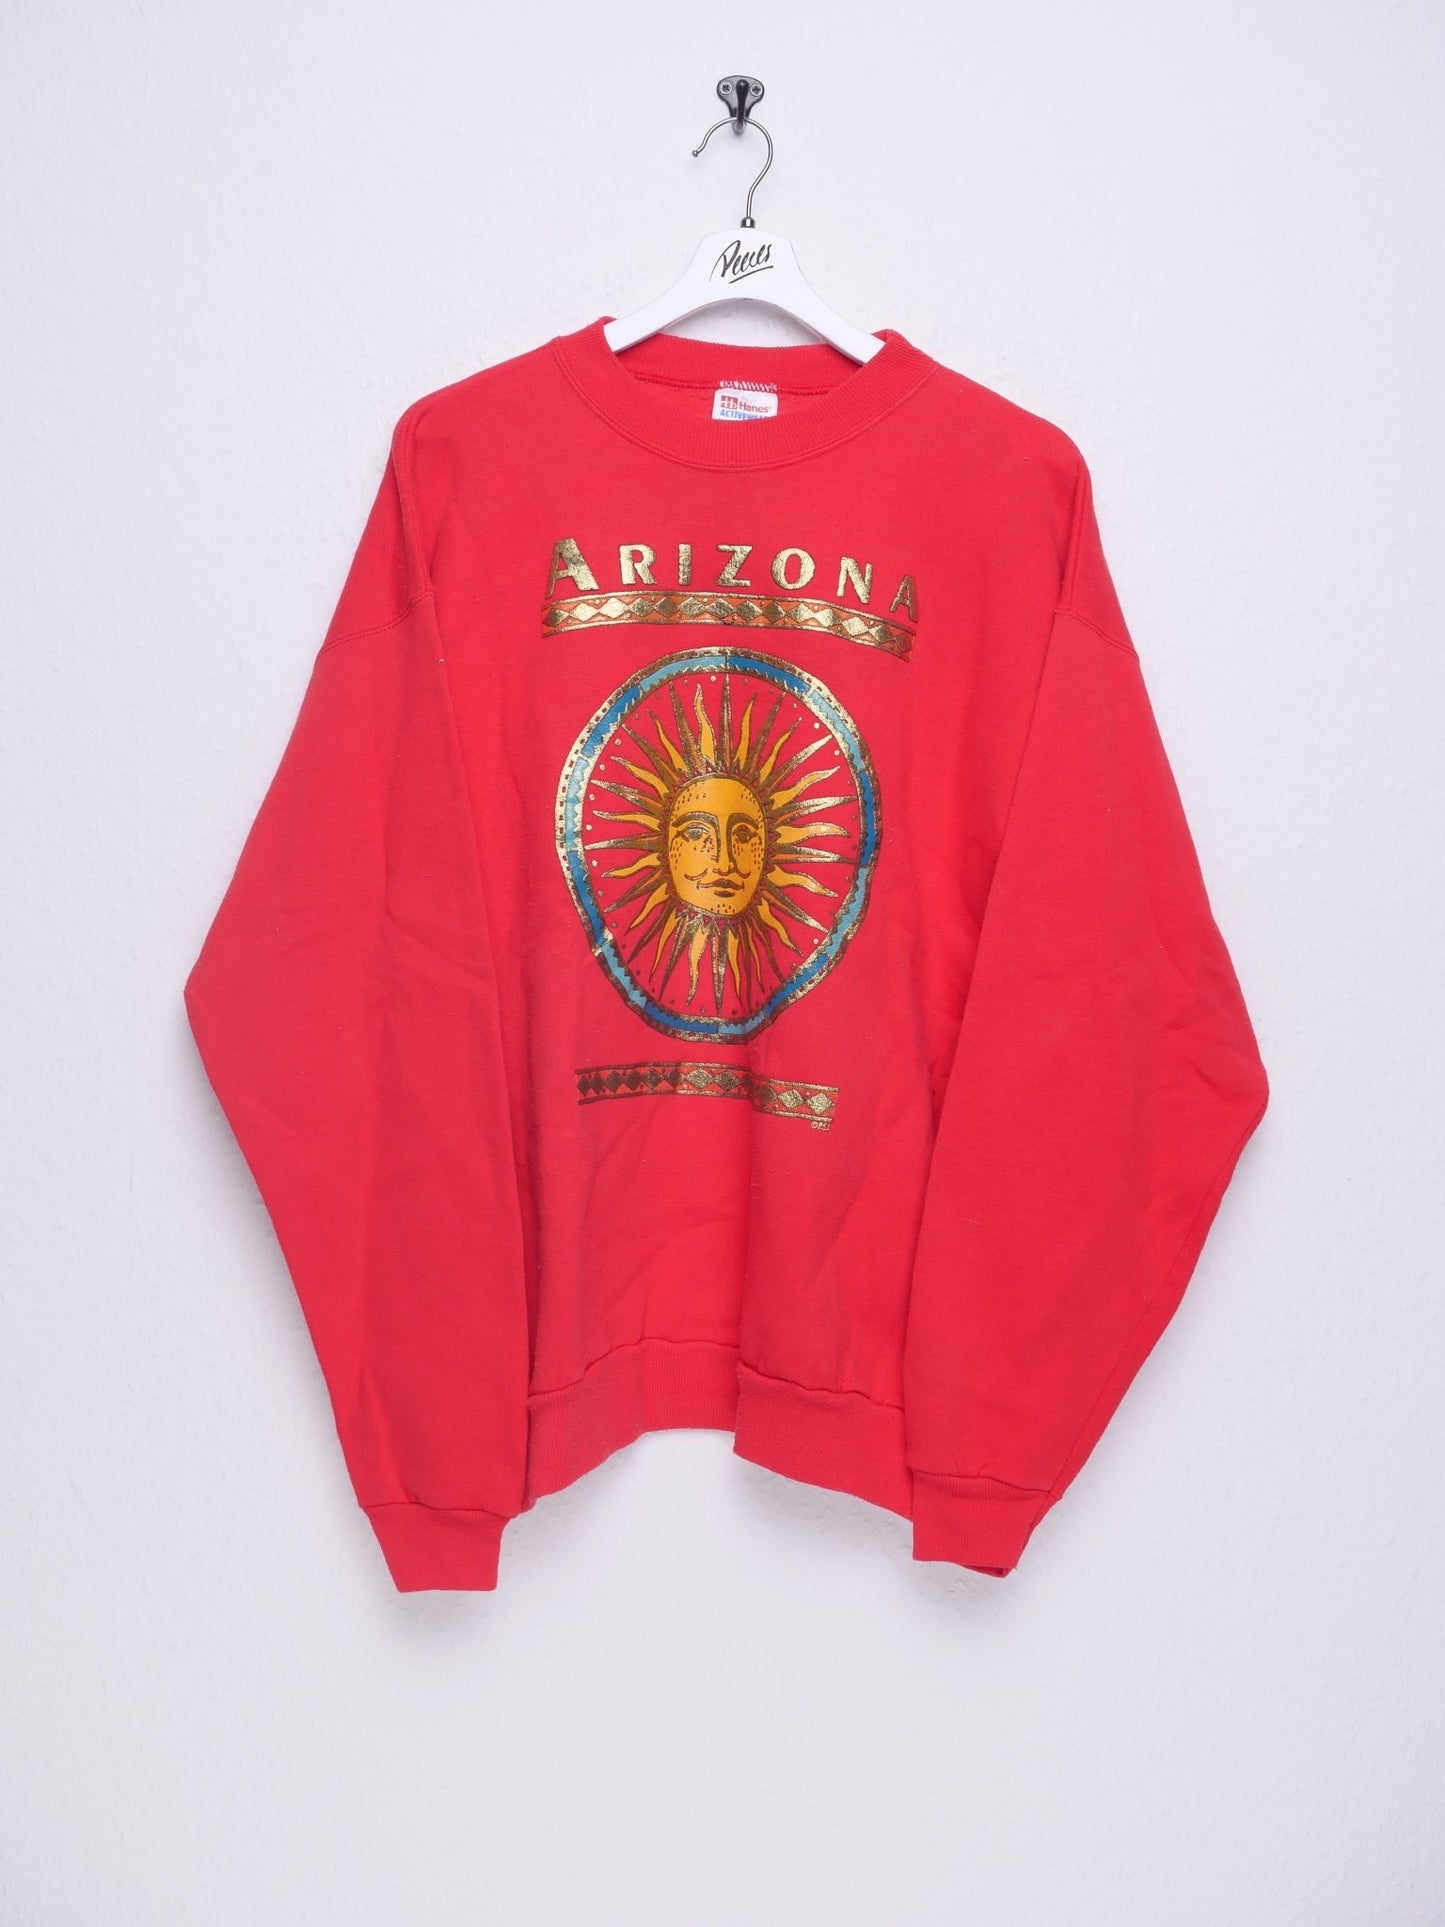 printed Big Logo 'Arizona' red Sweater - Peeces